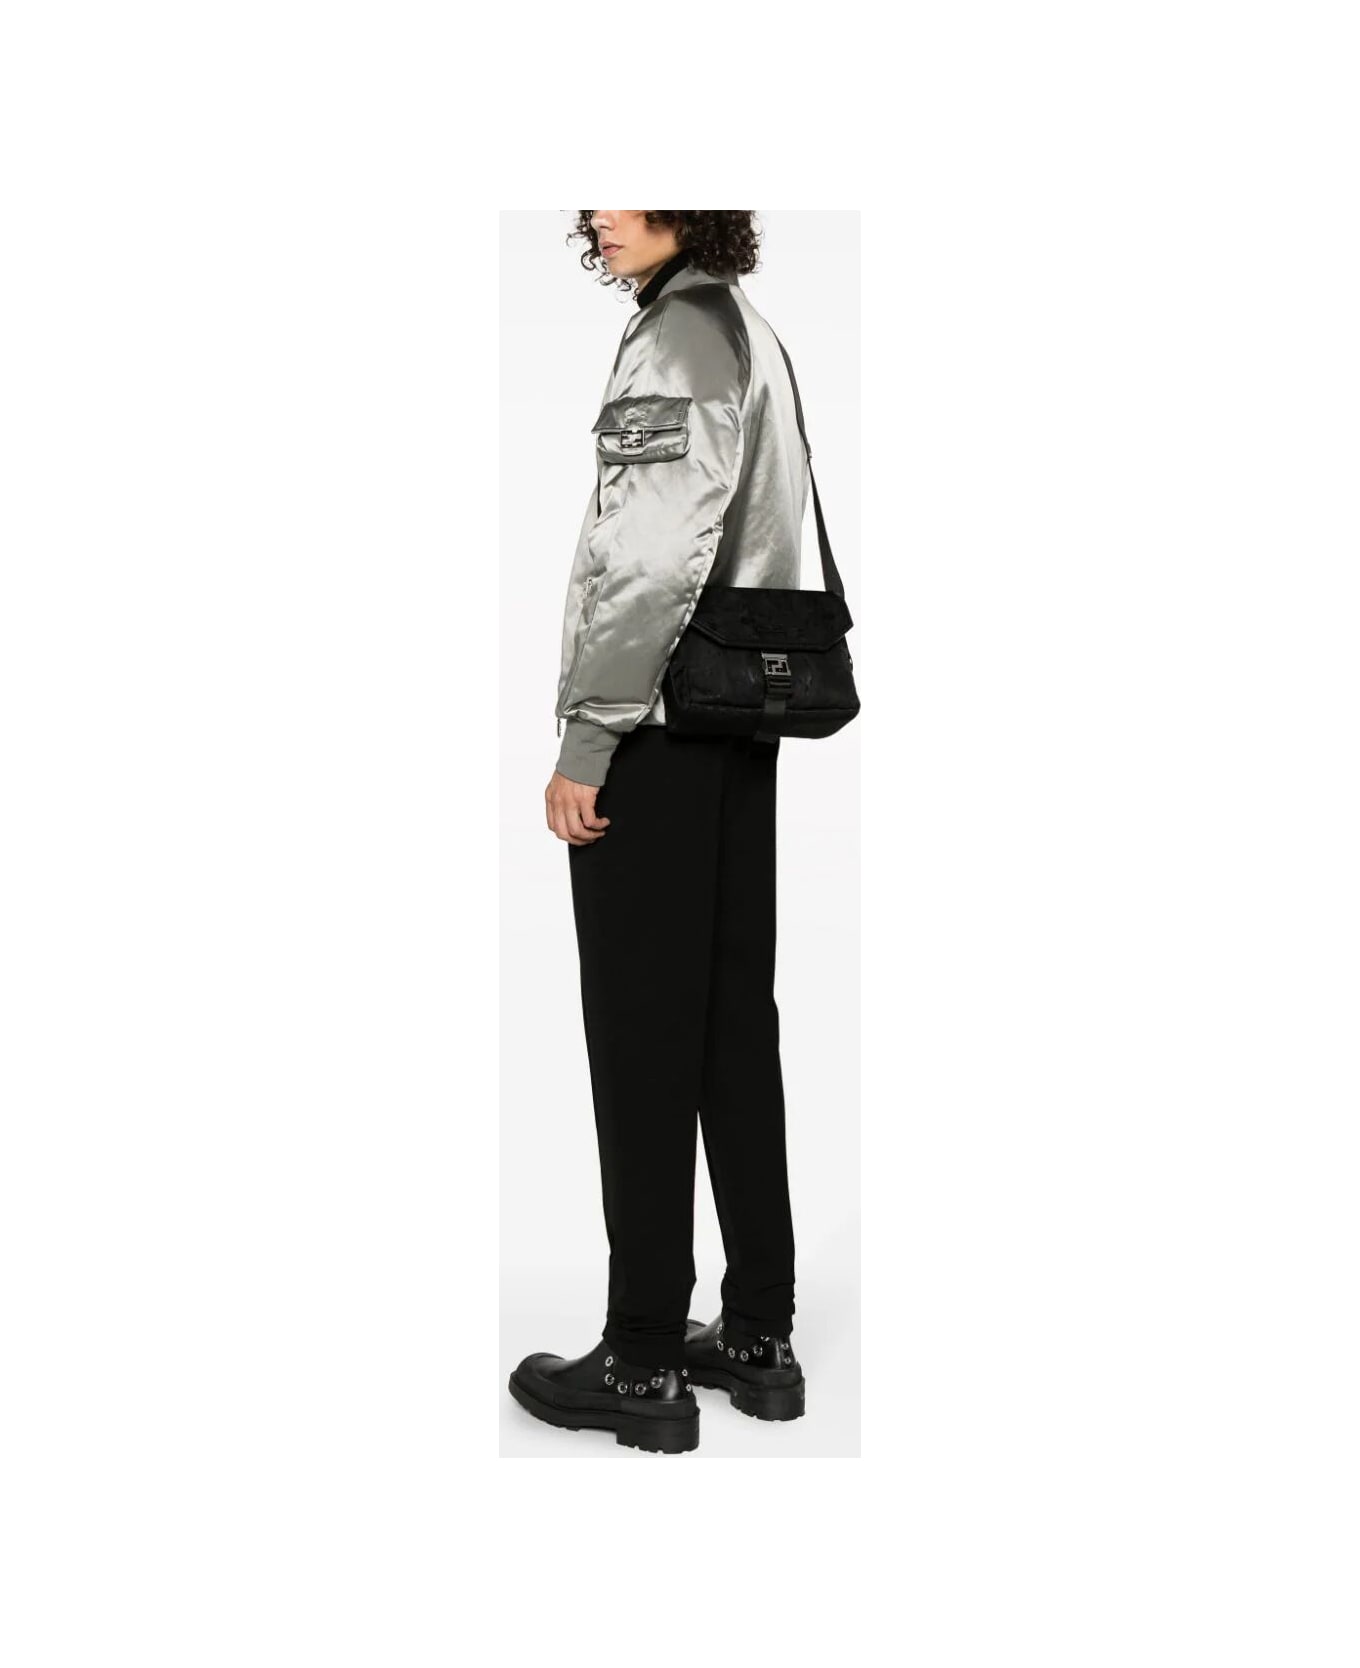 Versace Messenger Fabric Nylon Barocco - Xbody K60k607503 Ves bag